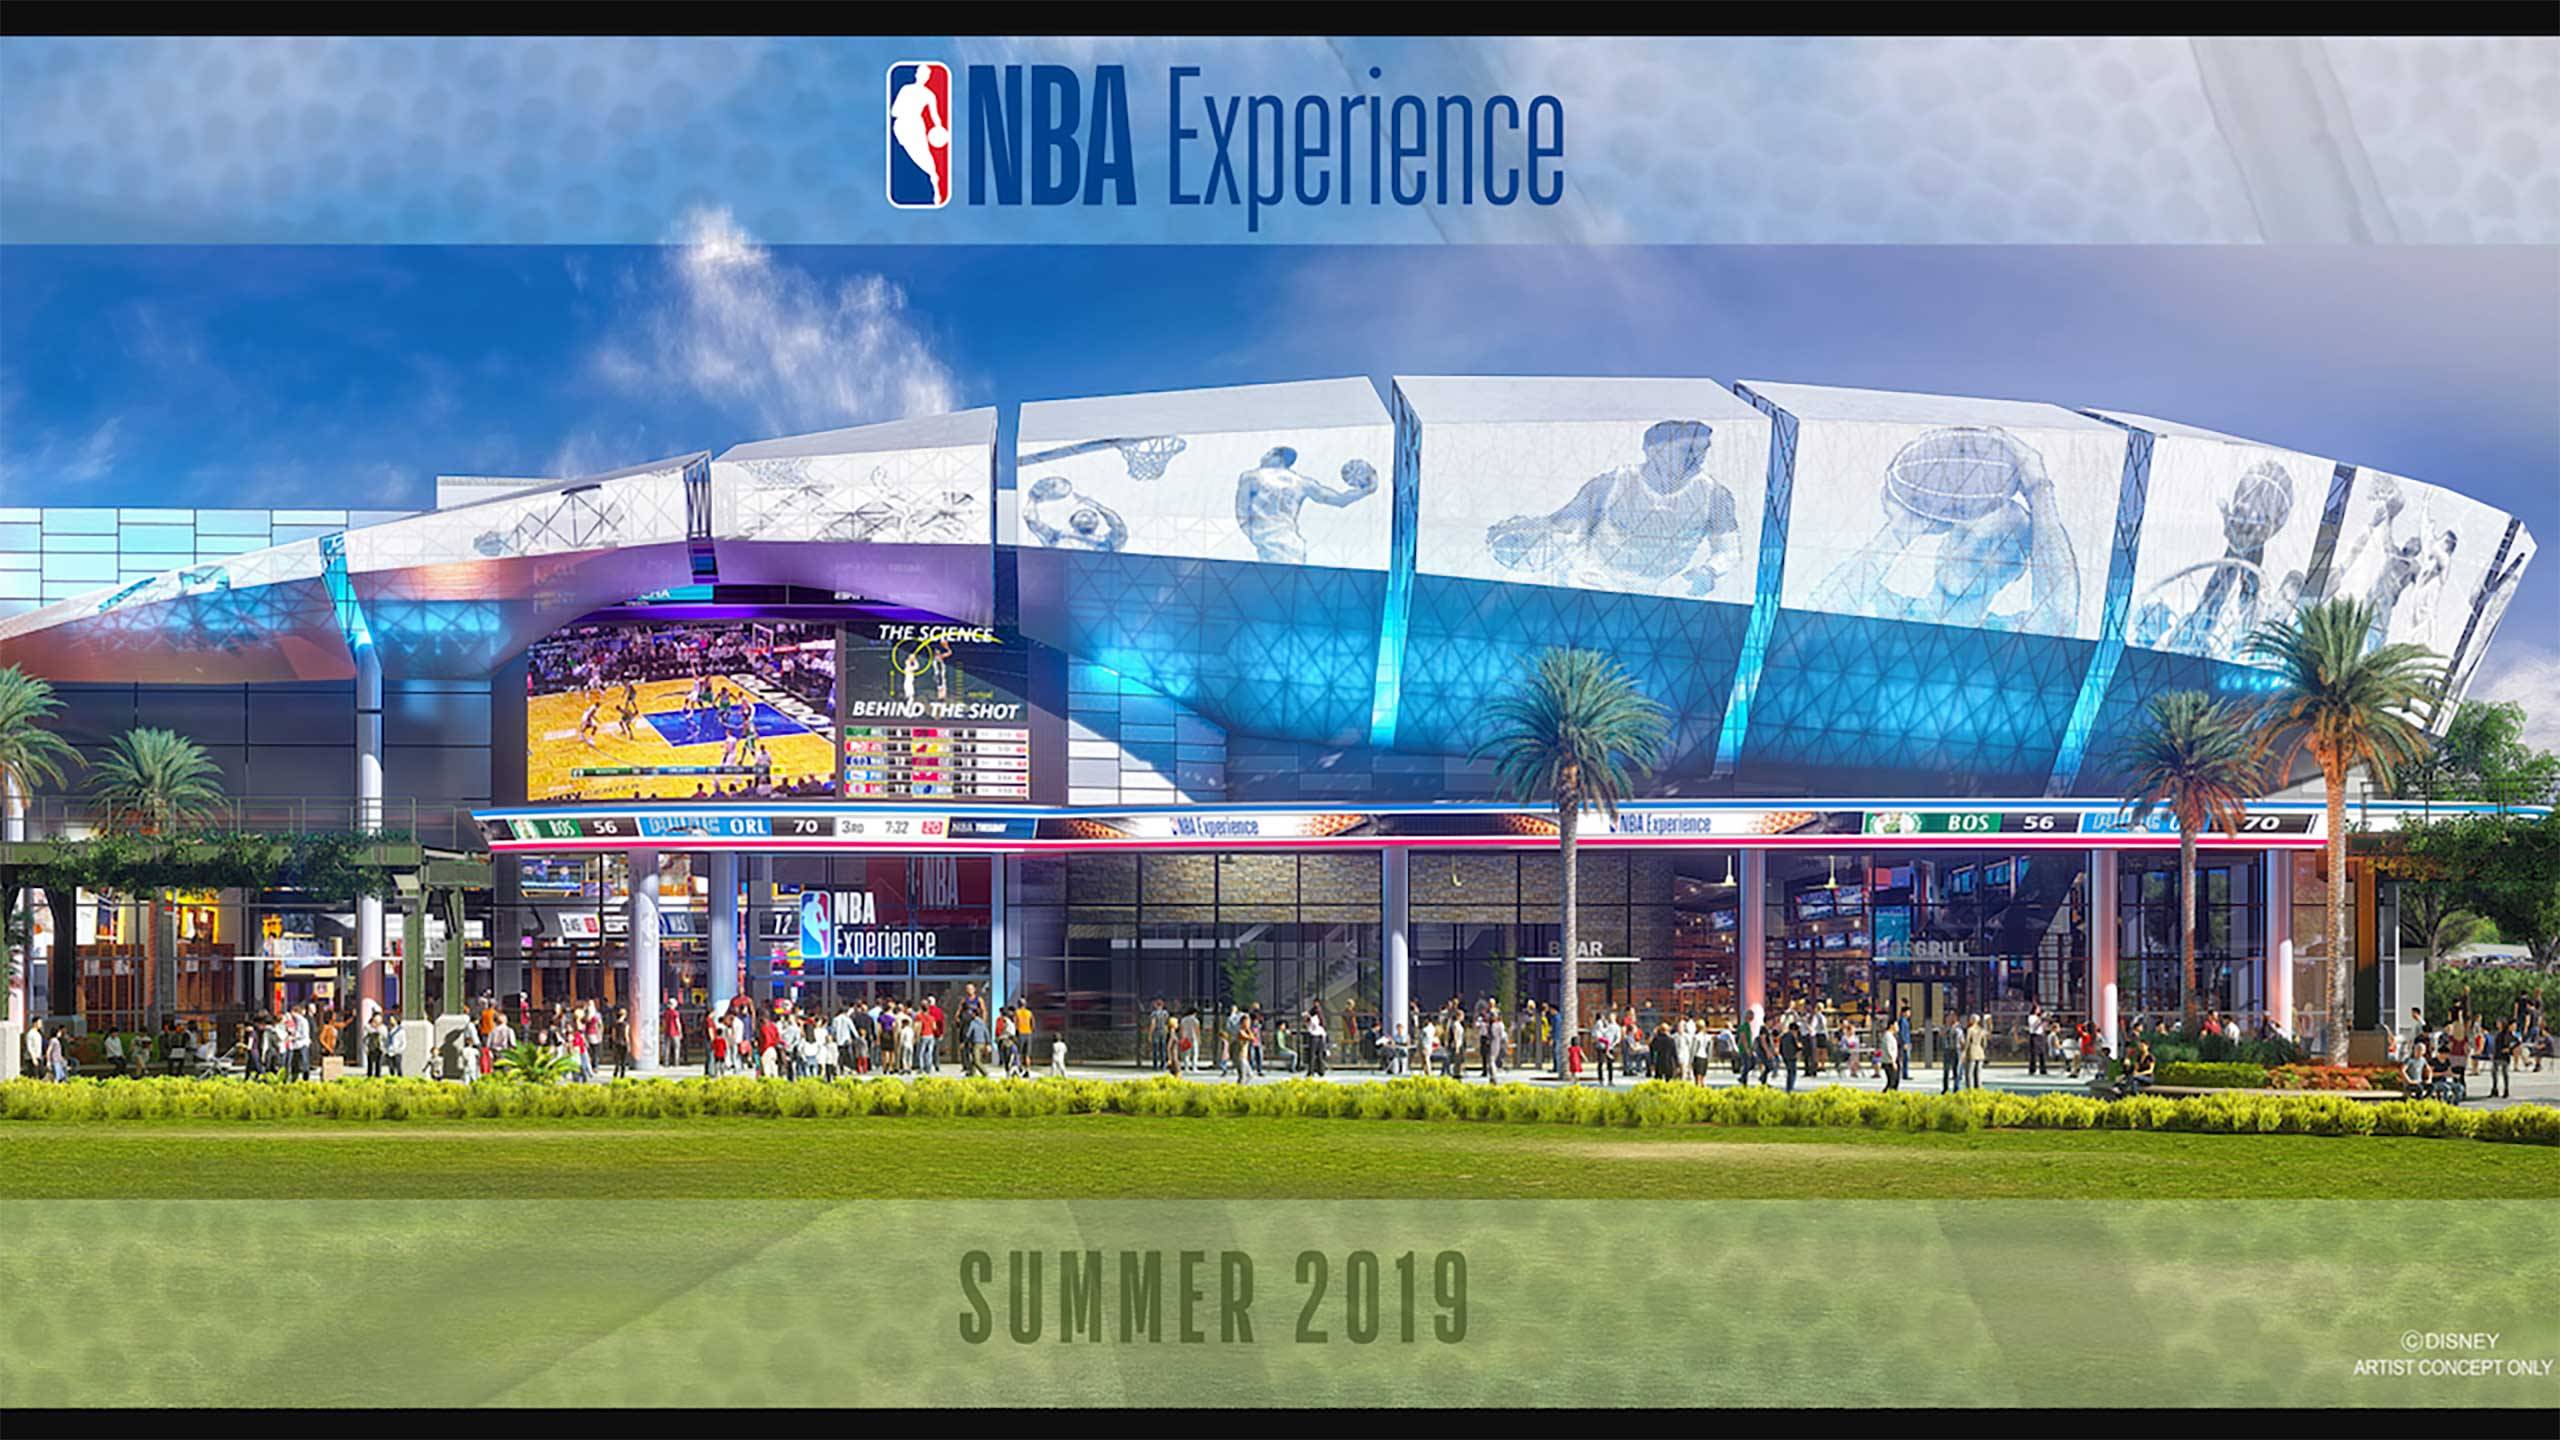 The NBA Experience concept art